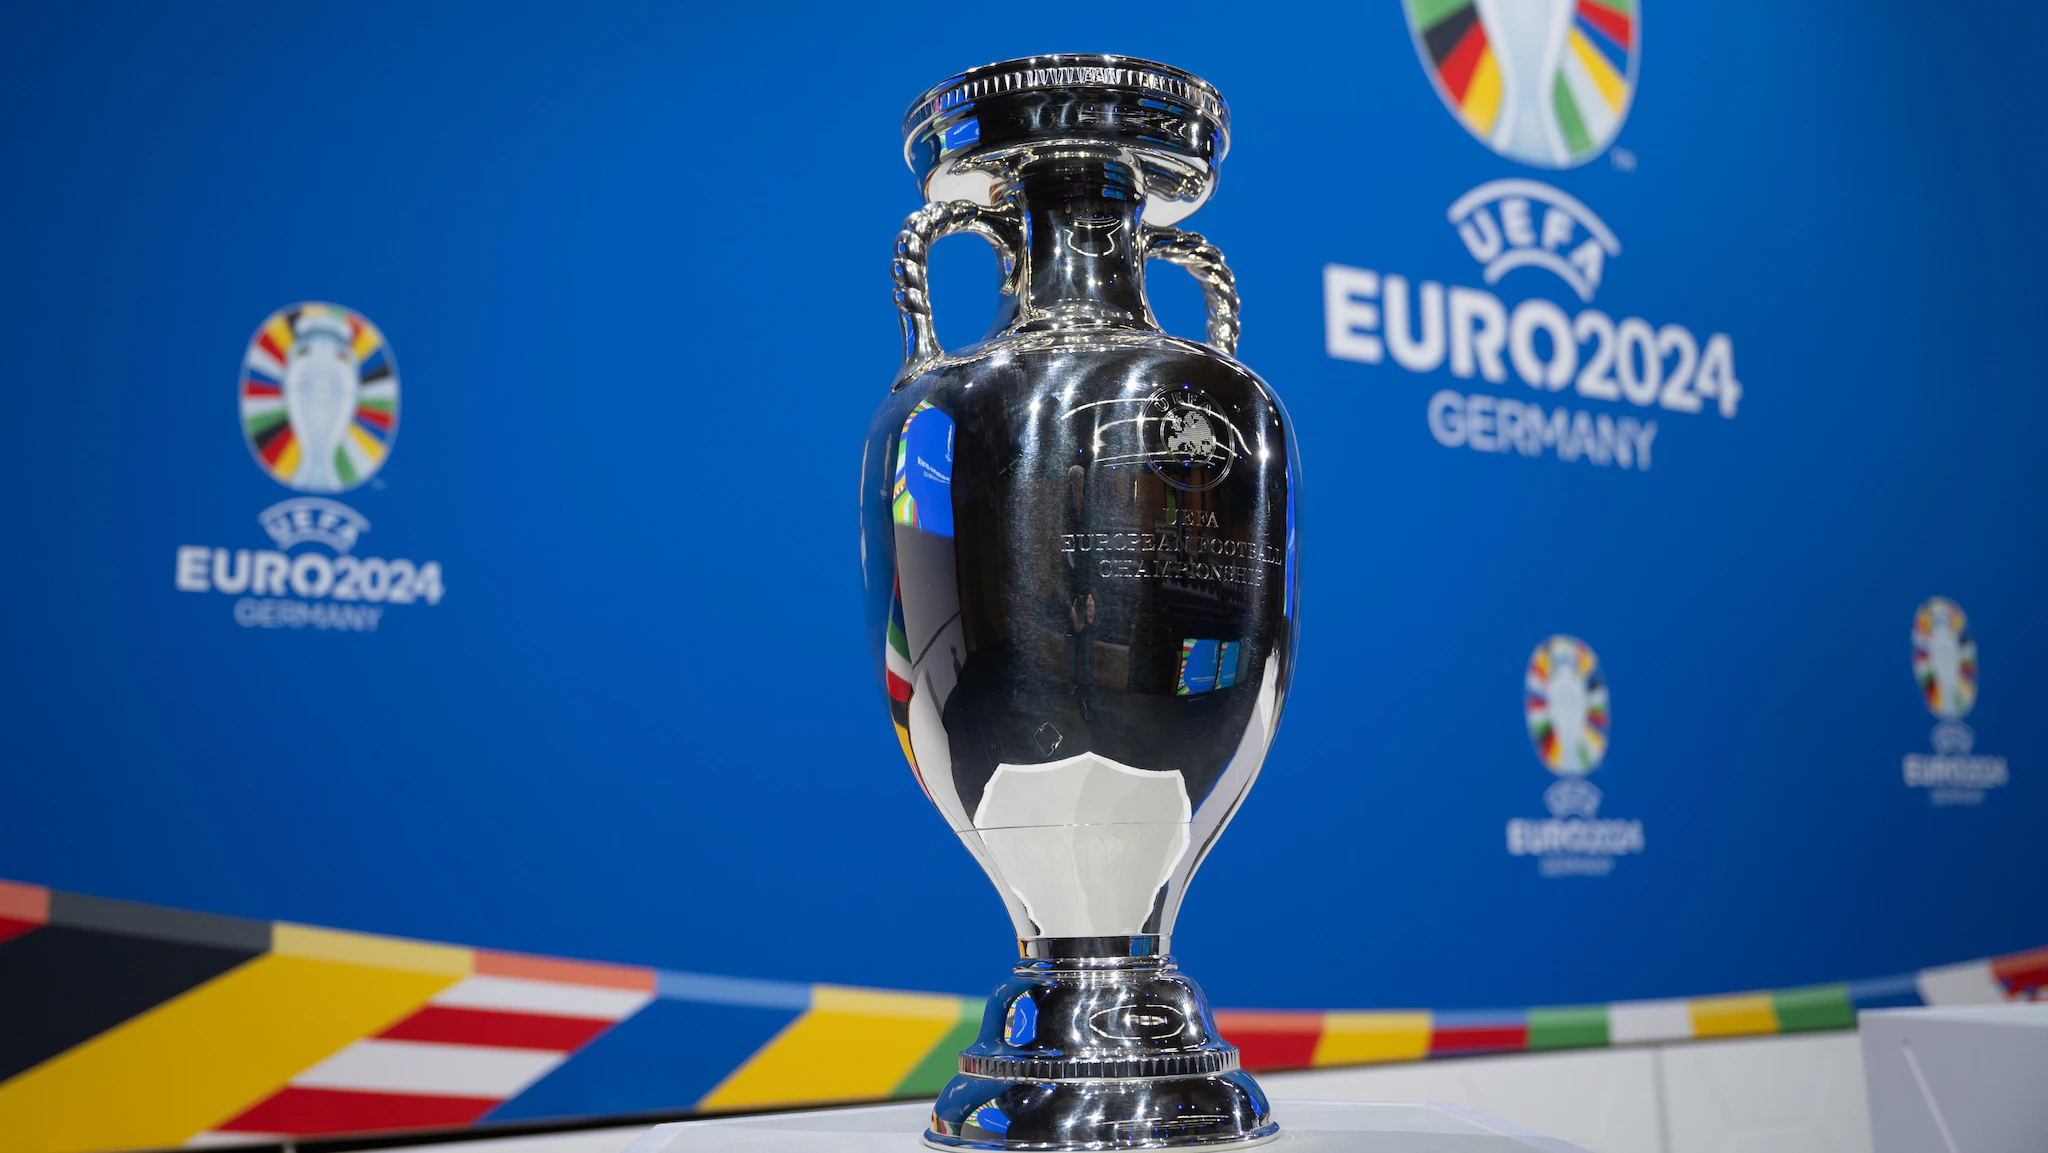 UEFA European Championship 2024 Overview